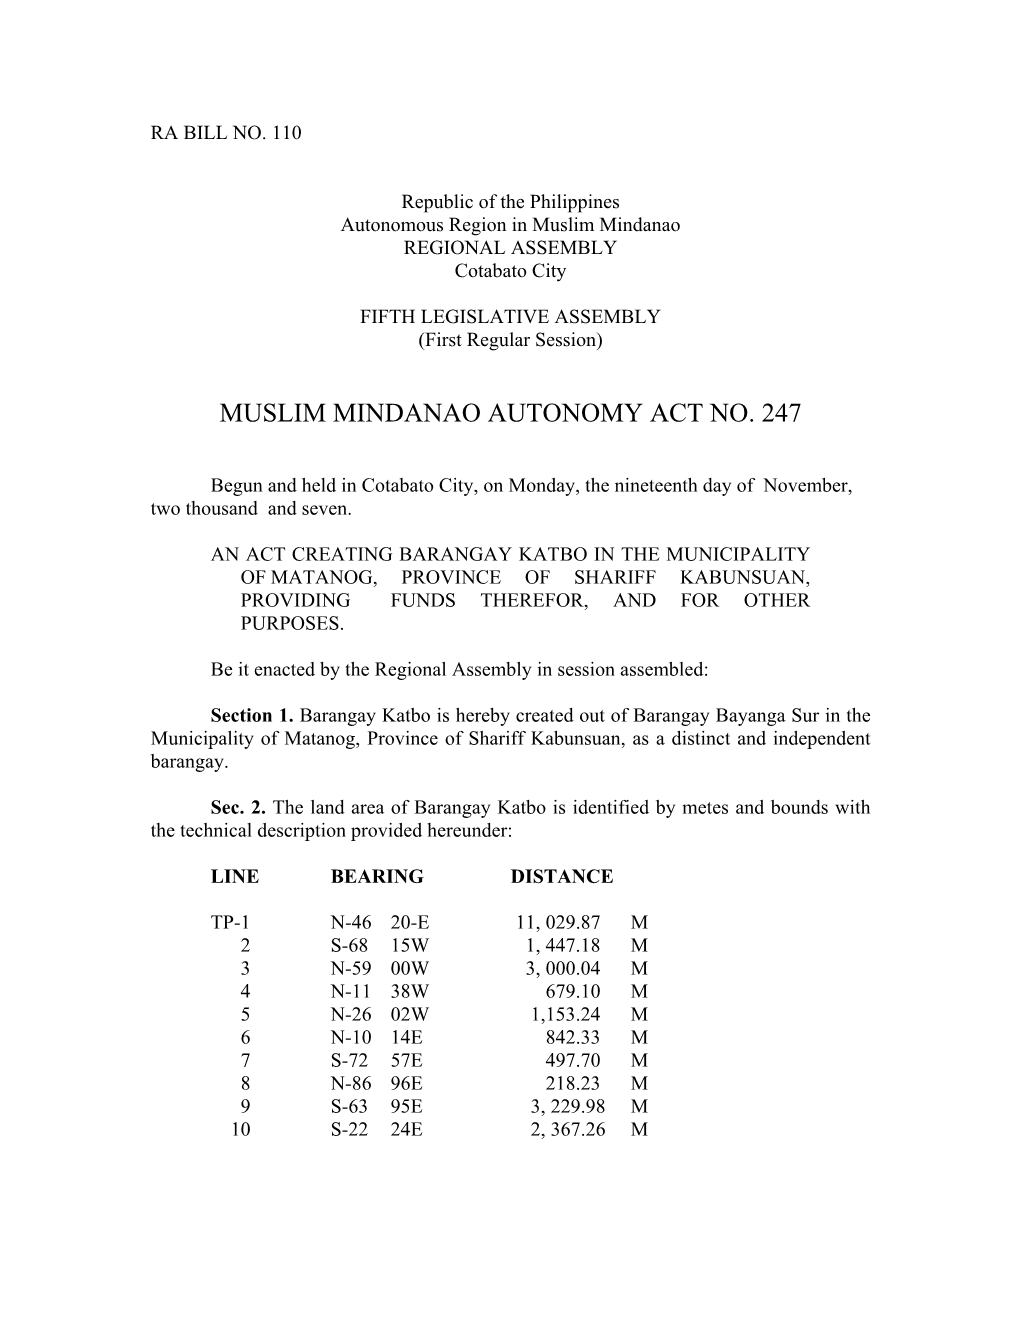 Muslim Mindanao Autonomy Act No. 247